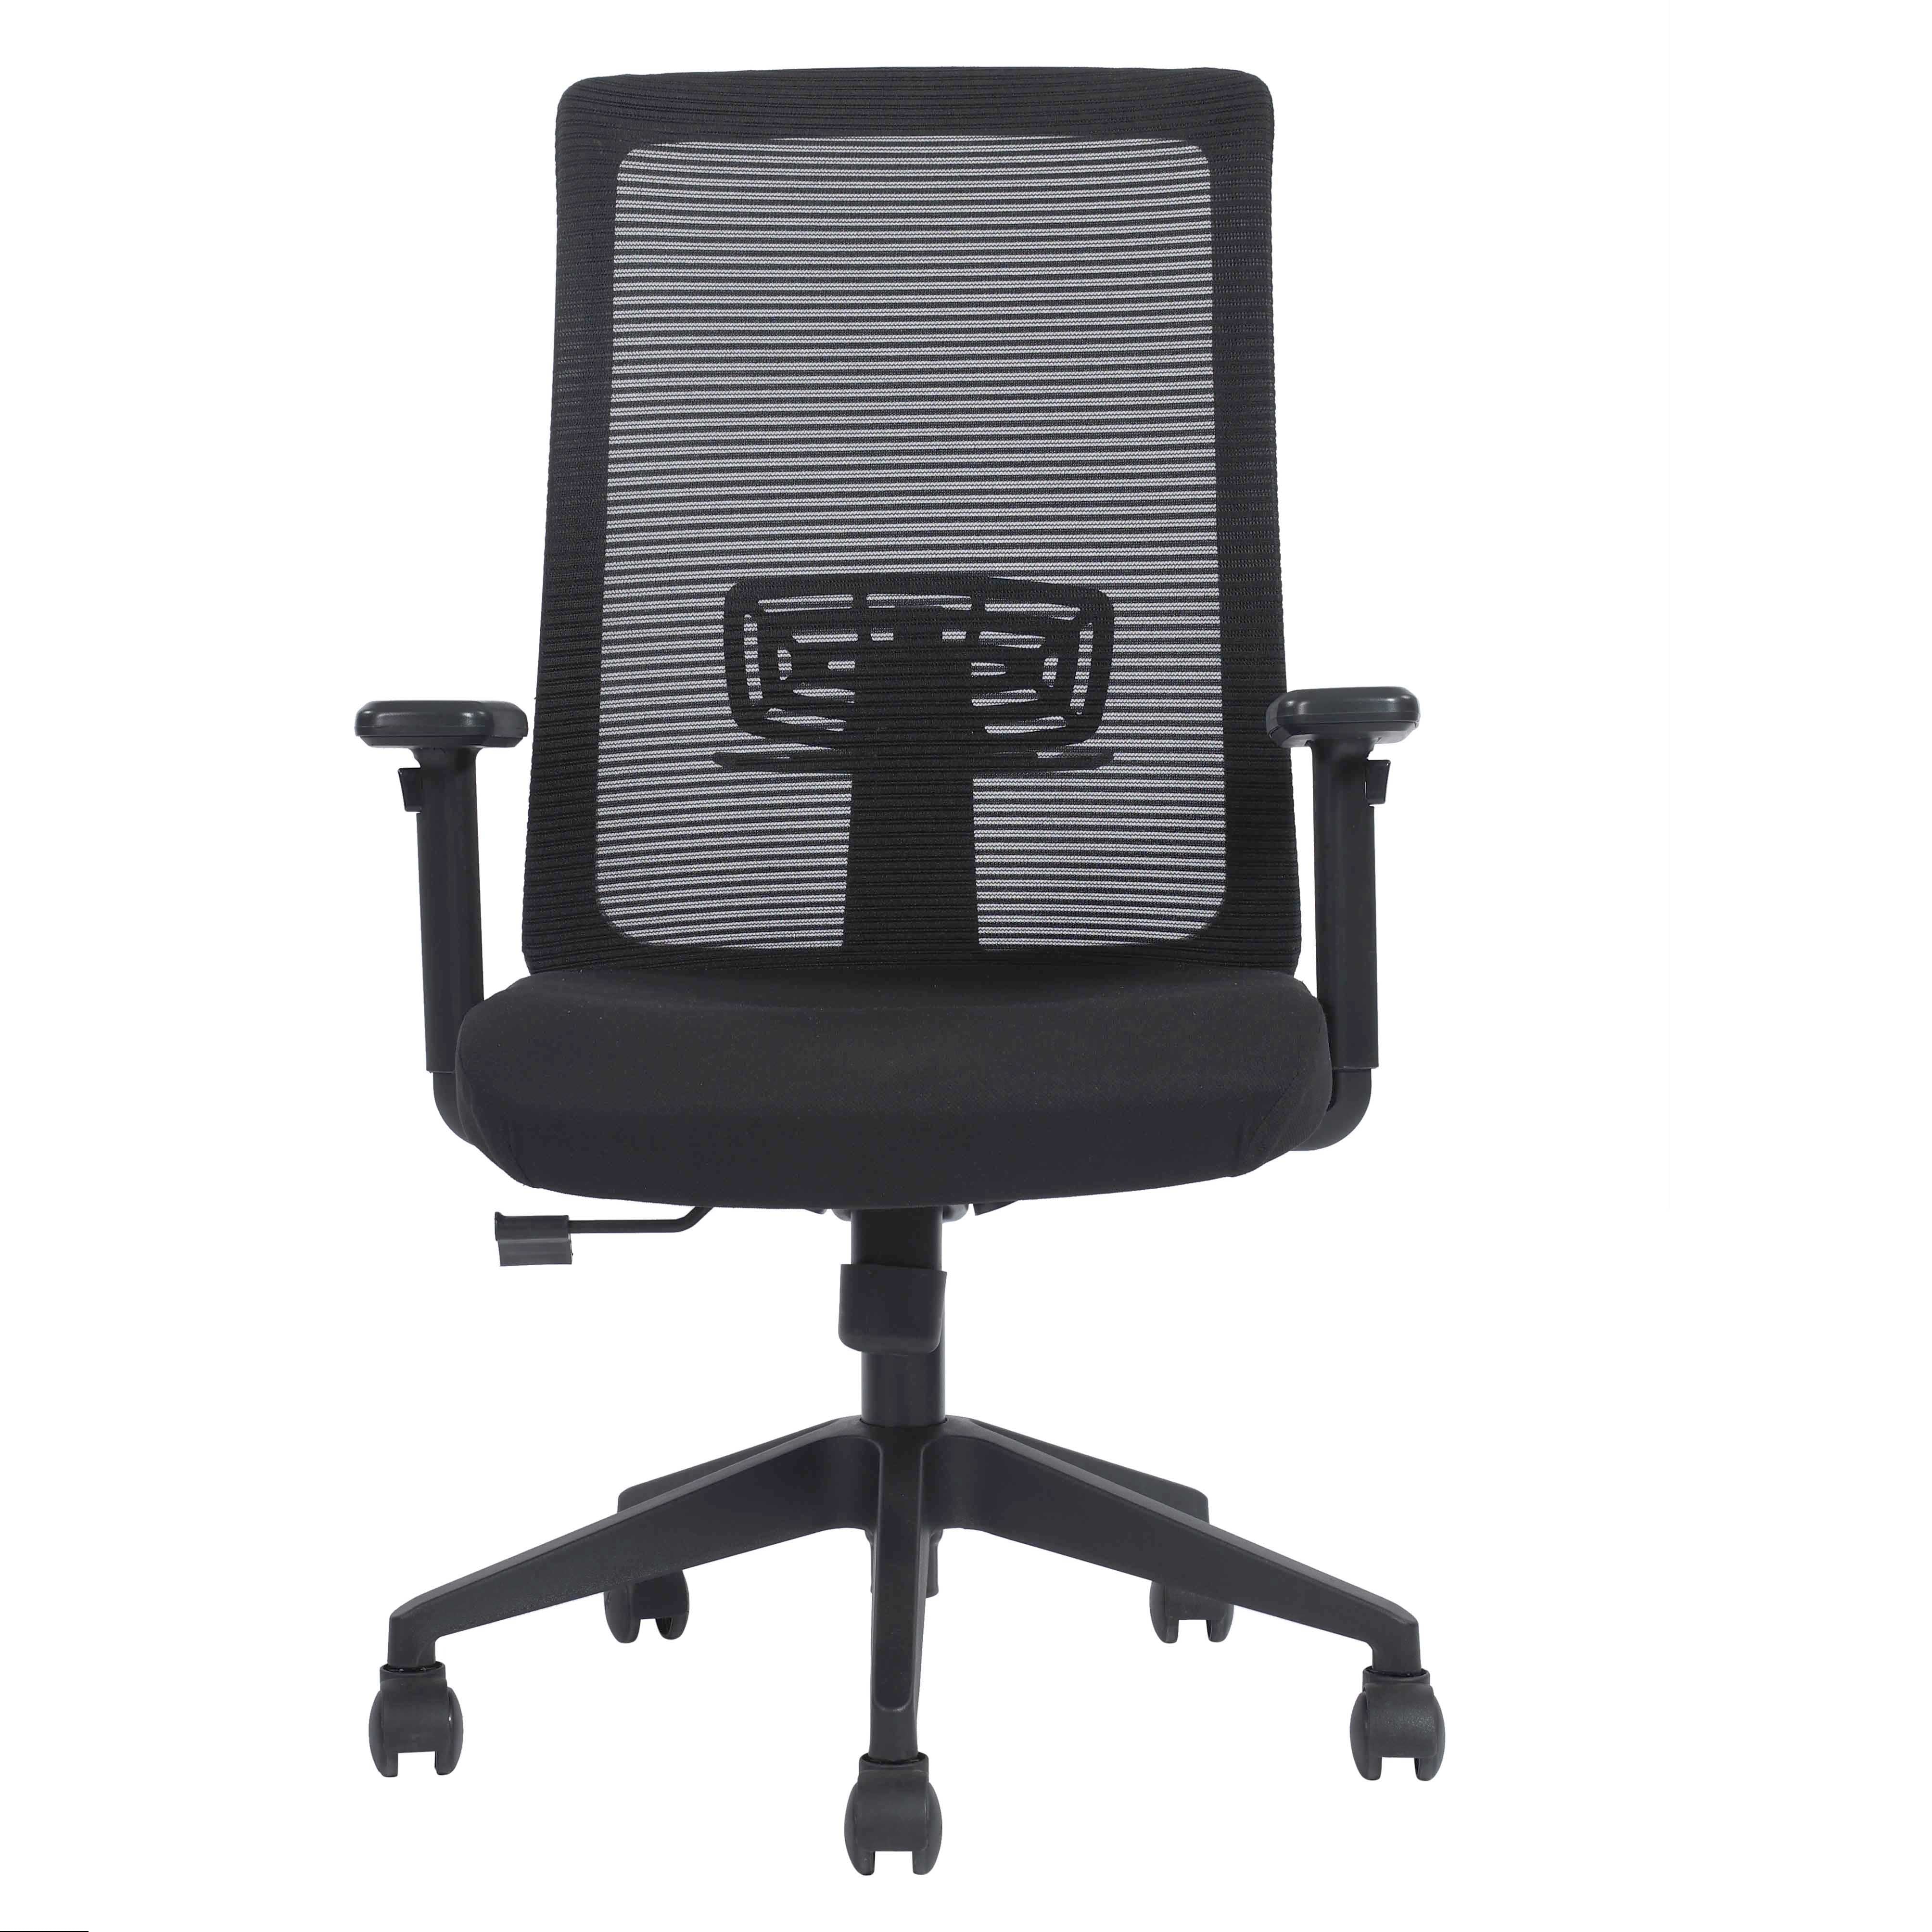 Diego Workstation Office Chair - Black Chair urbancart